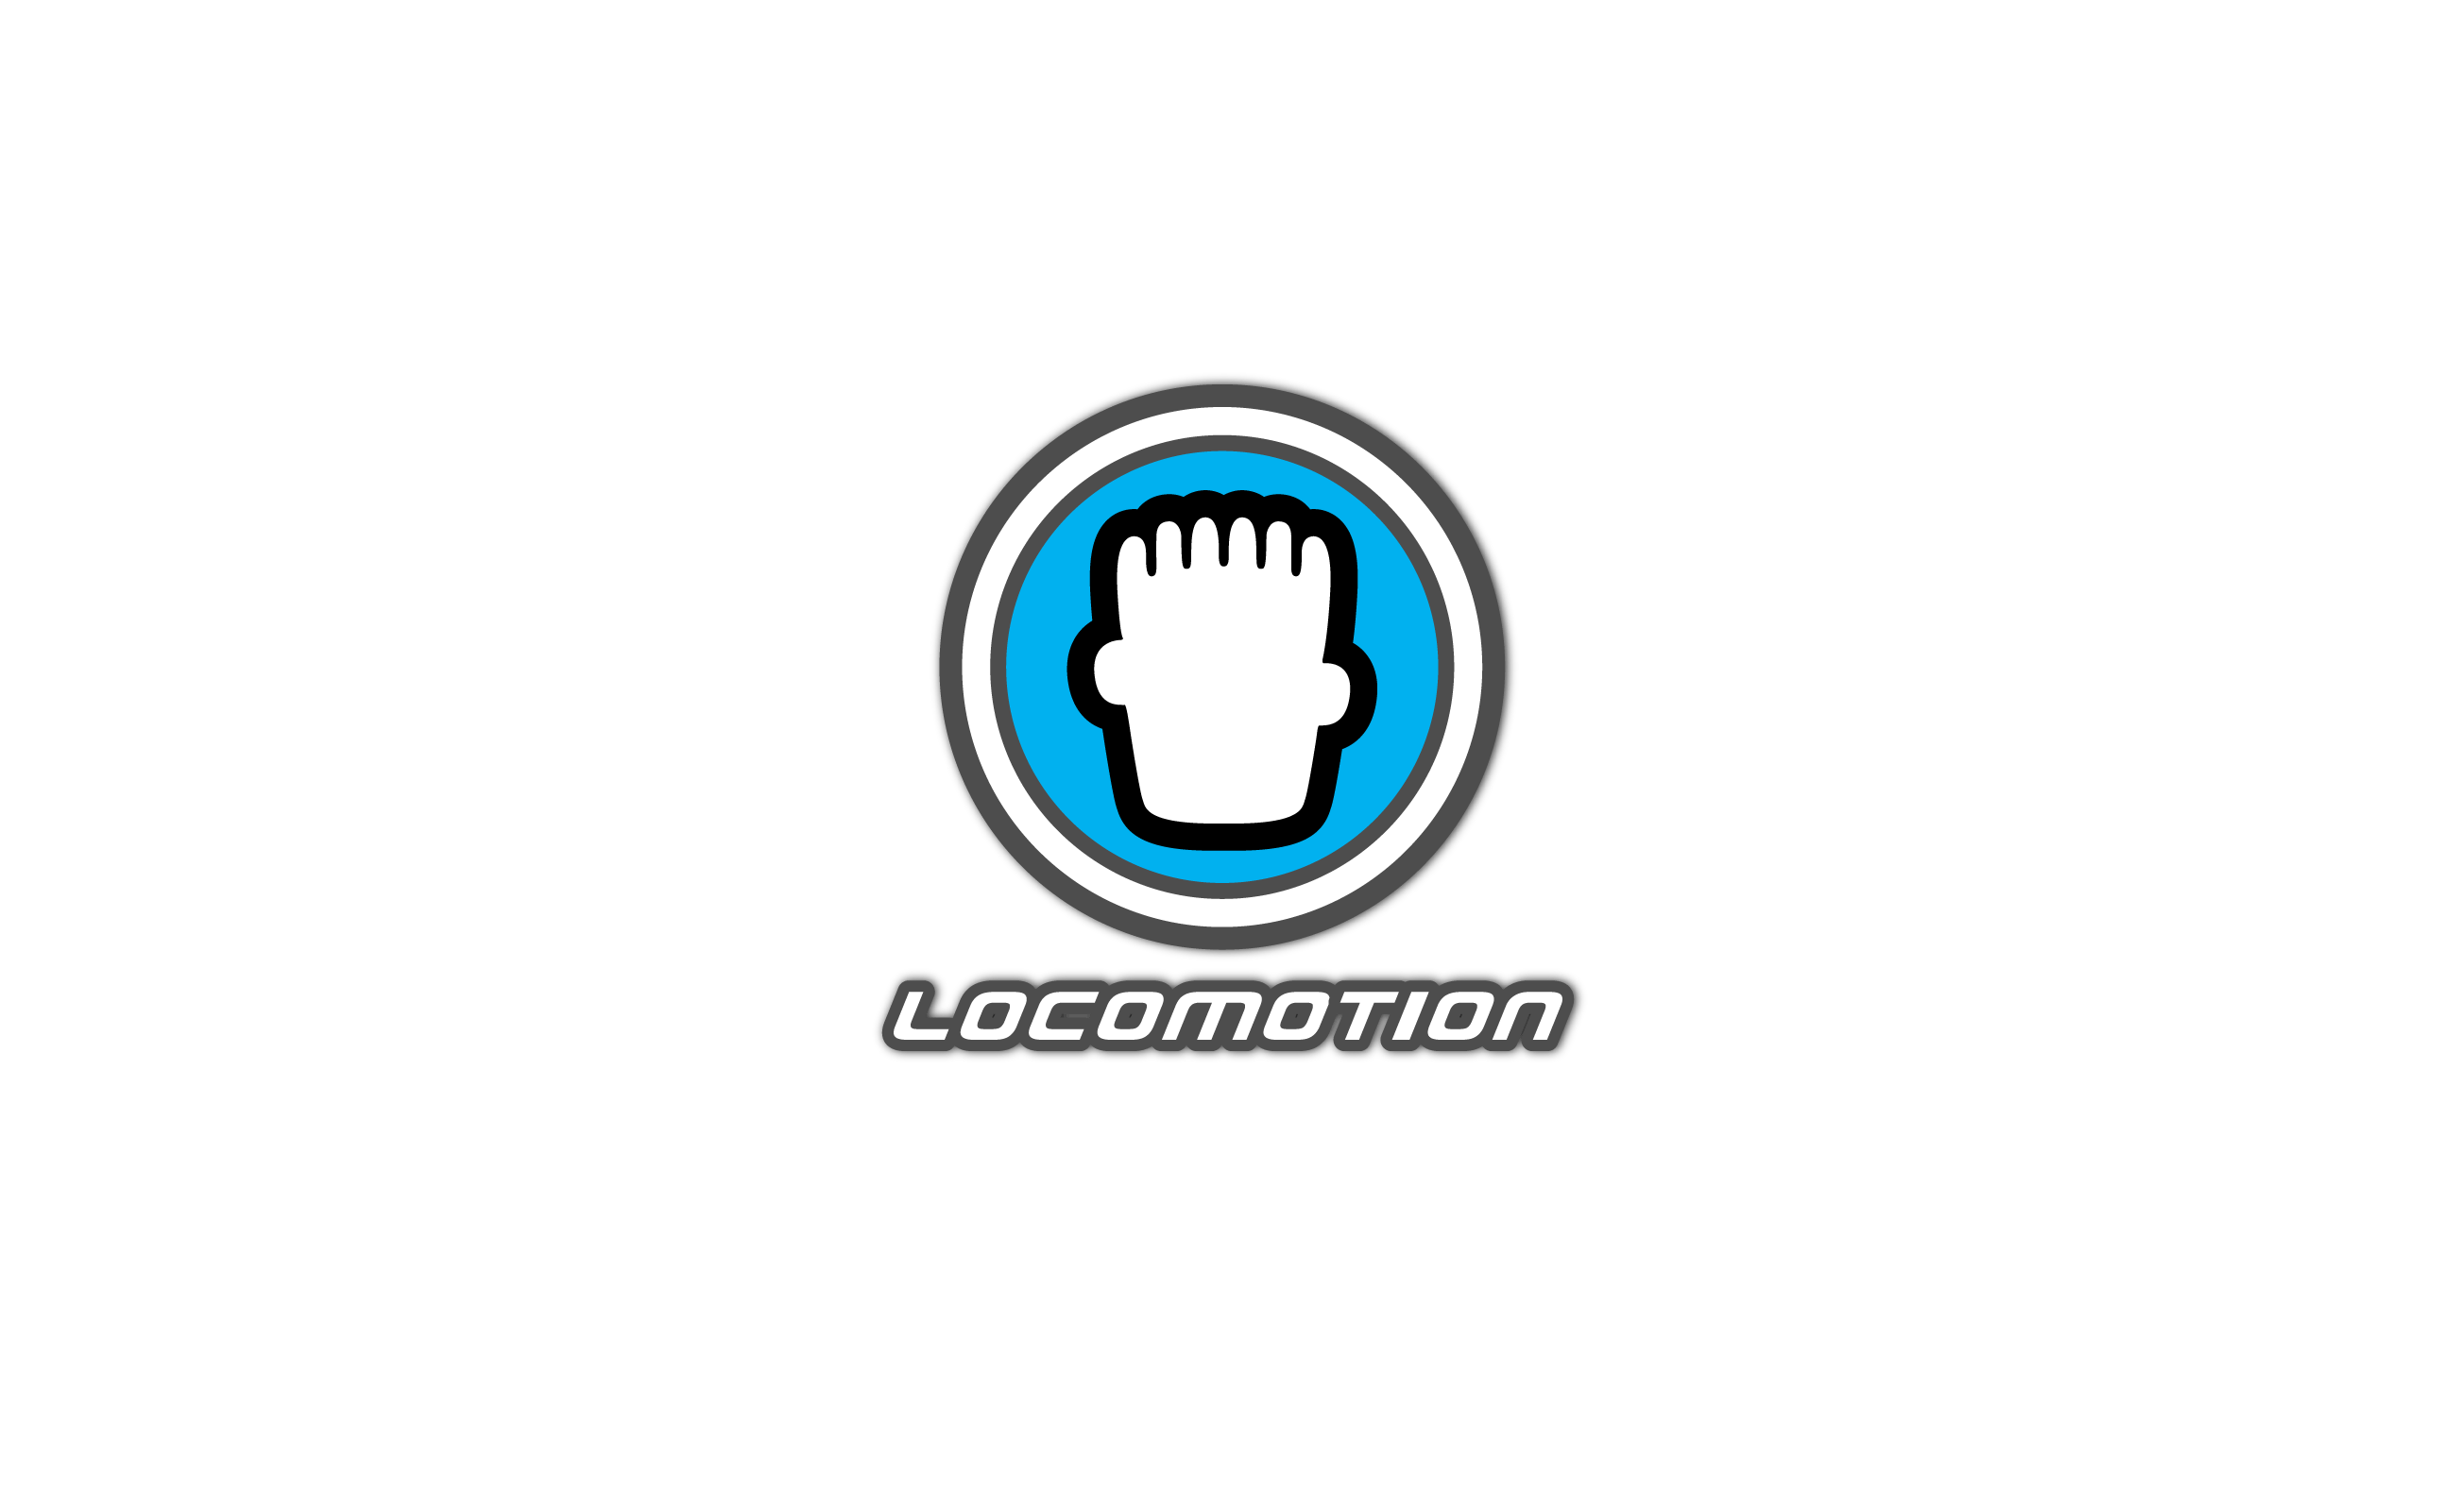 Locomotion Logo - LOGO DESIGN